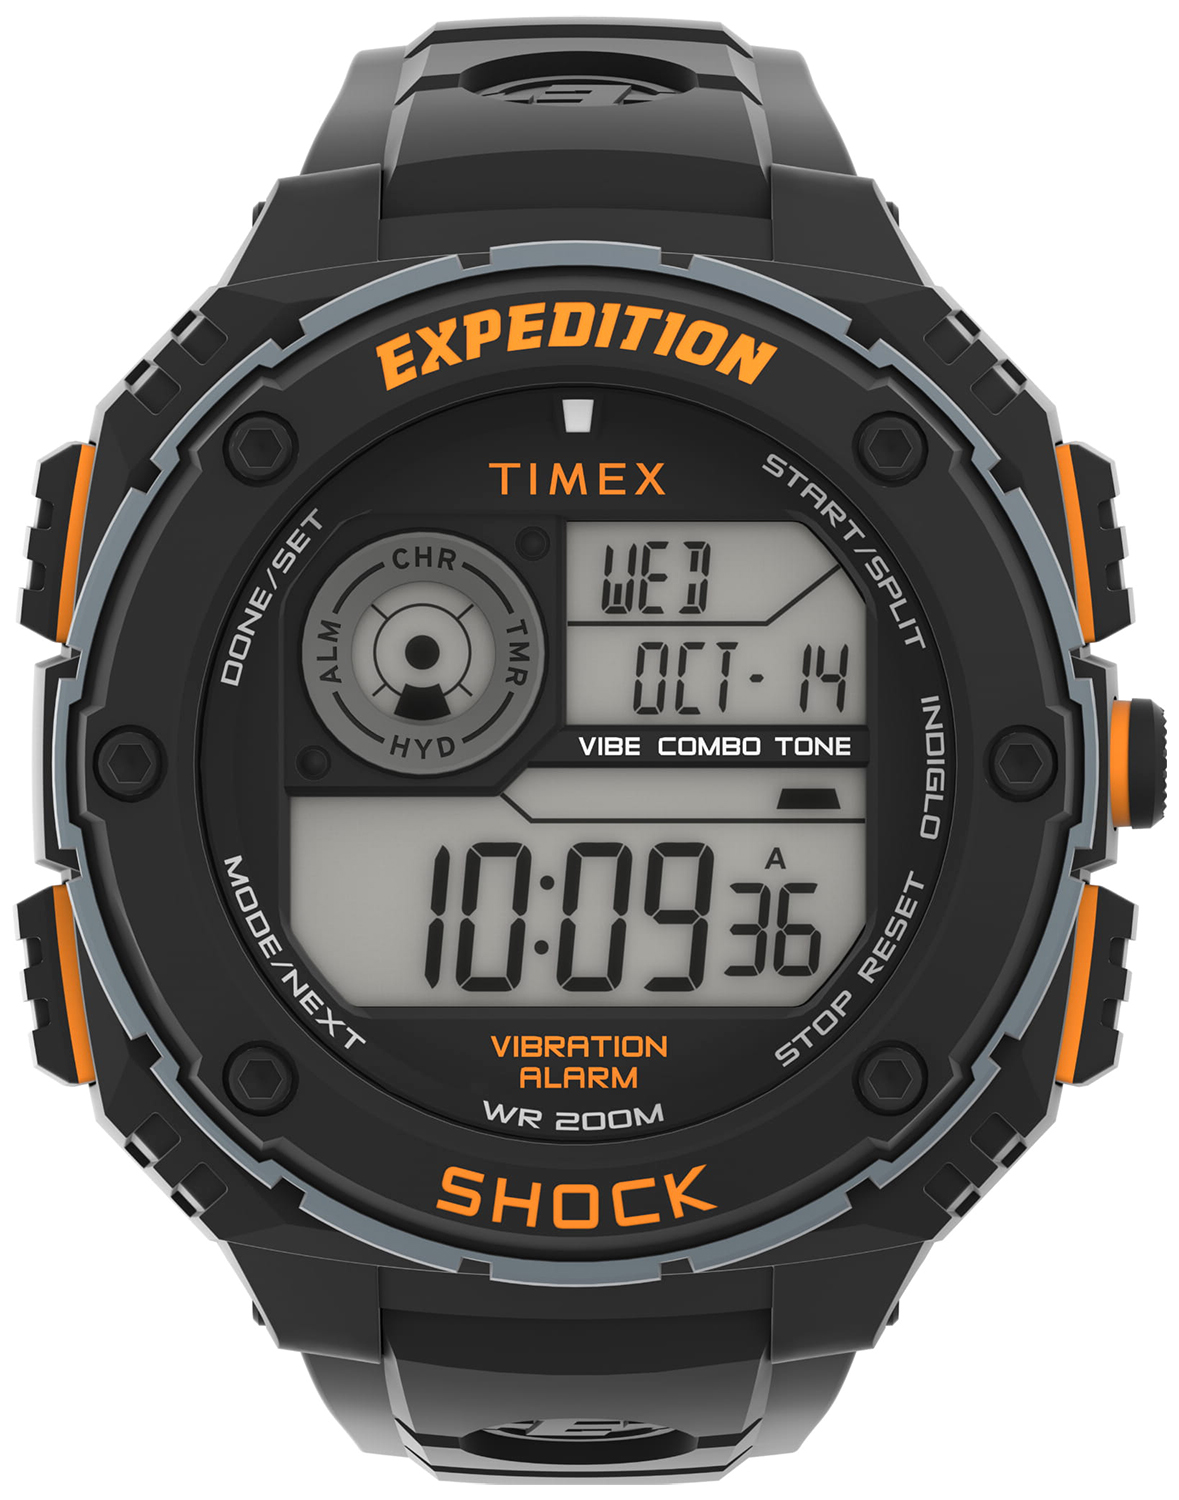 Zegarek Timex TW4B24200 Expedition Shock XL Vibrating Alarm